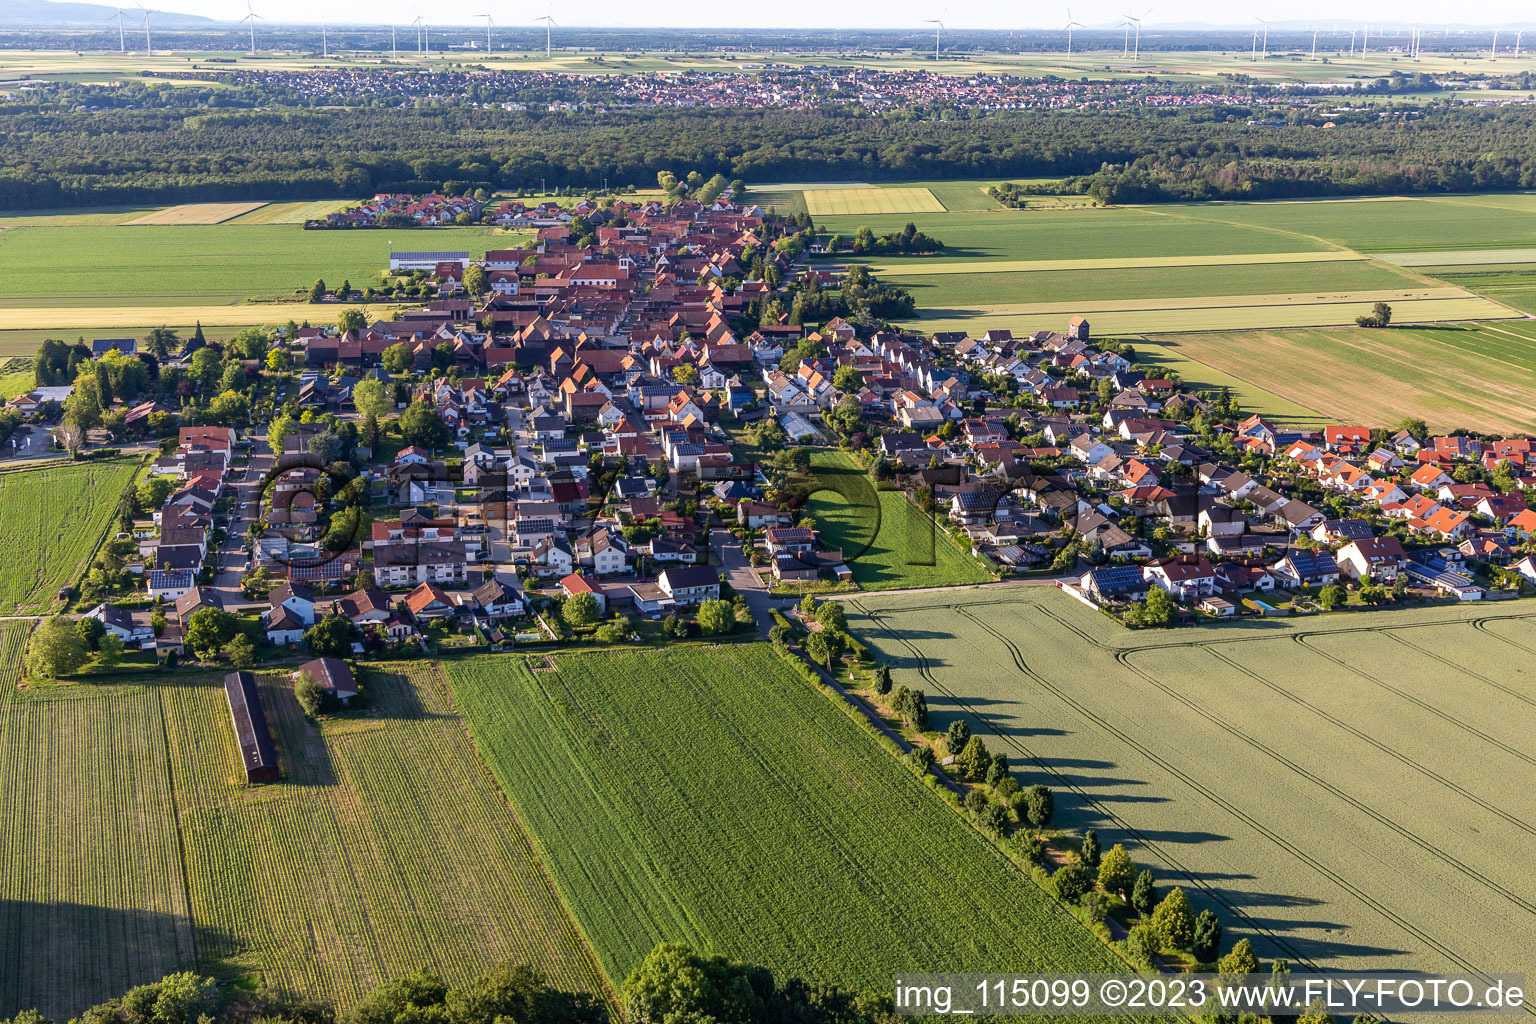 District Hayna in Herxheim bei Landau/Pfalz in the state Rhineland-Palatinate, Germany from the plane